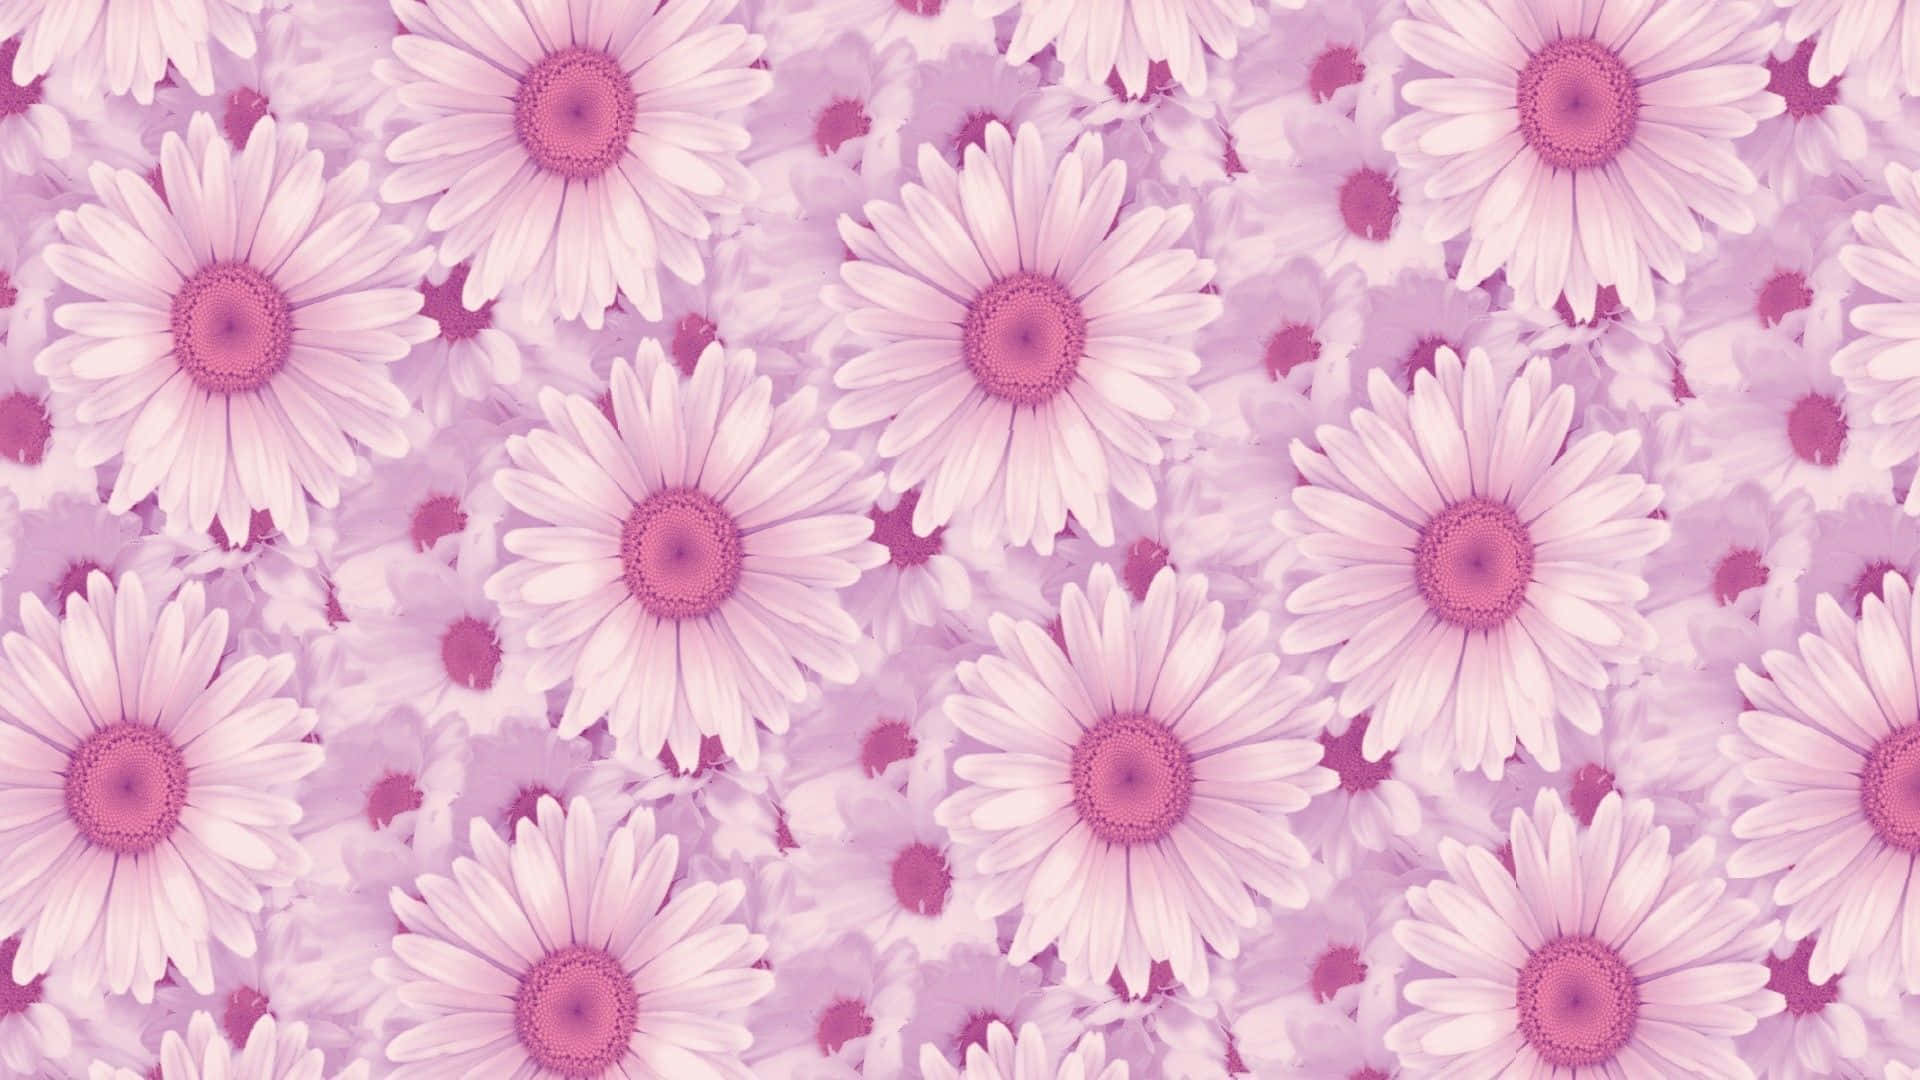 Pink Aesthetic Tumblr Wallpaper